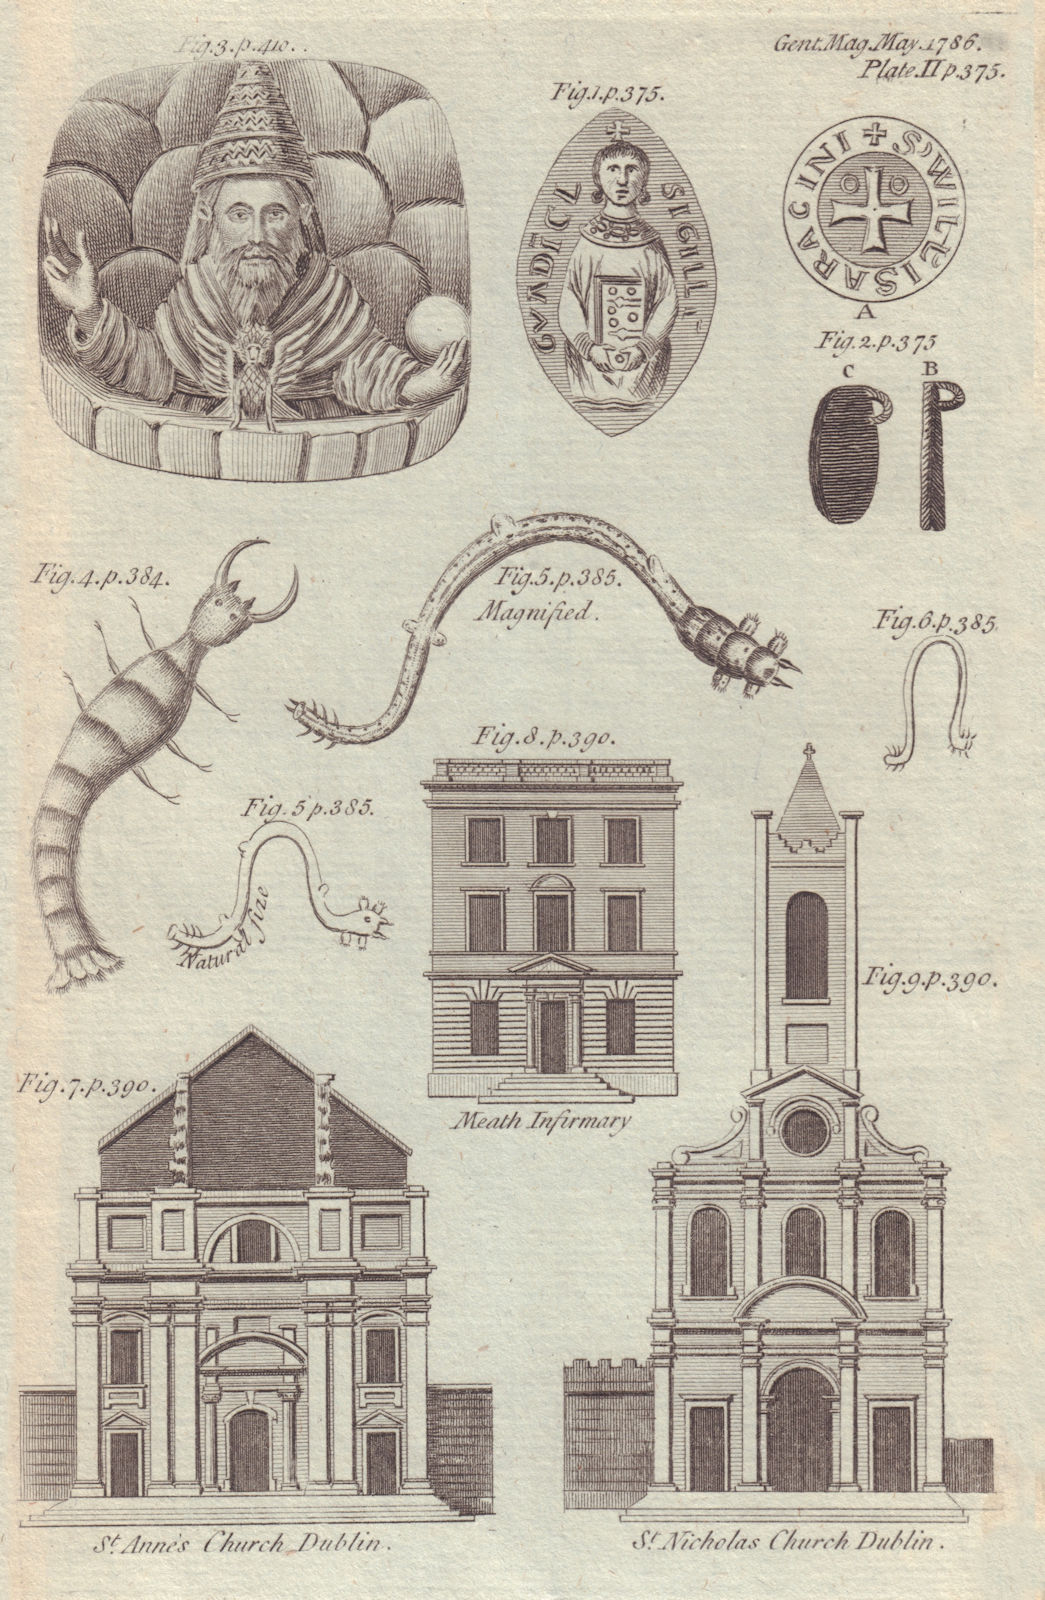 Associate Product St. Ann's, Dawson St. & St. Nicholas Church, Dublin. Meath Infirmary 1786